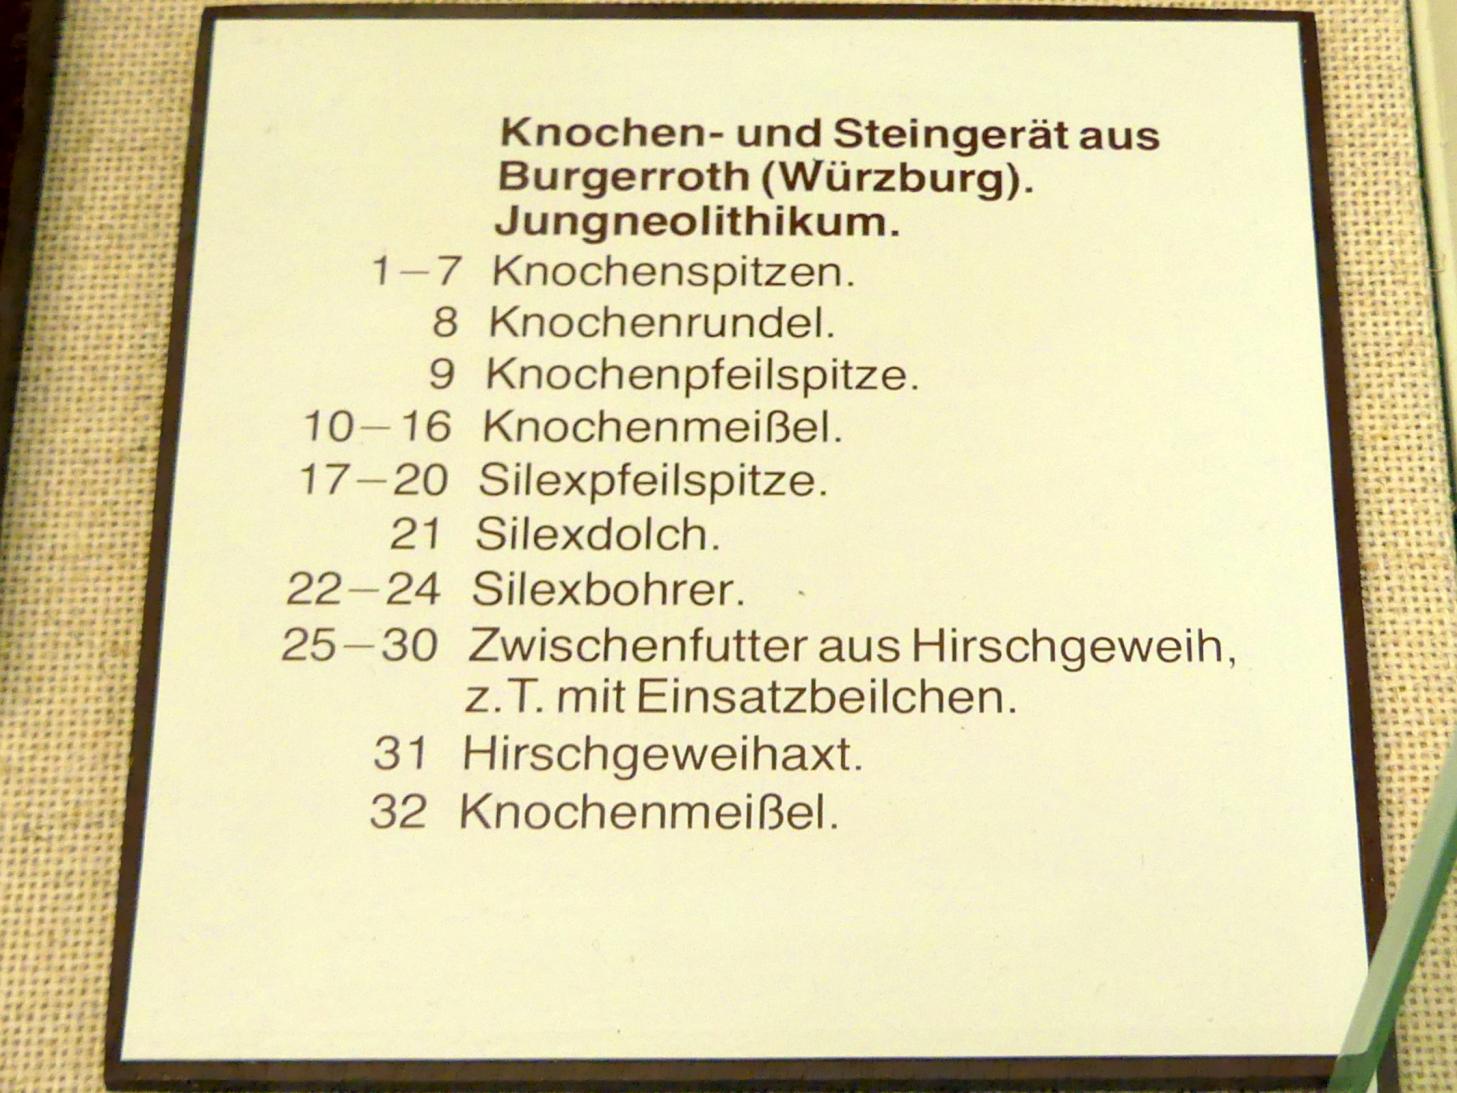 Knochenpfeilspitze, Jungneolithikum, 4400 - 3500 v. Chr., Bild 2/2